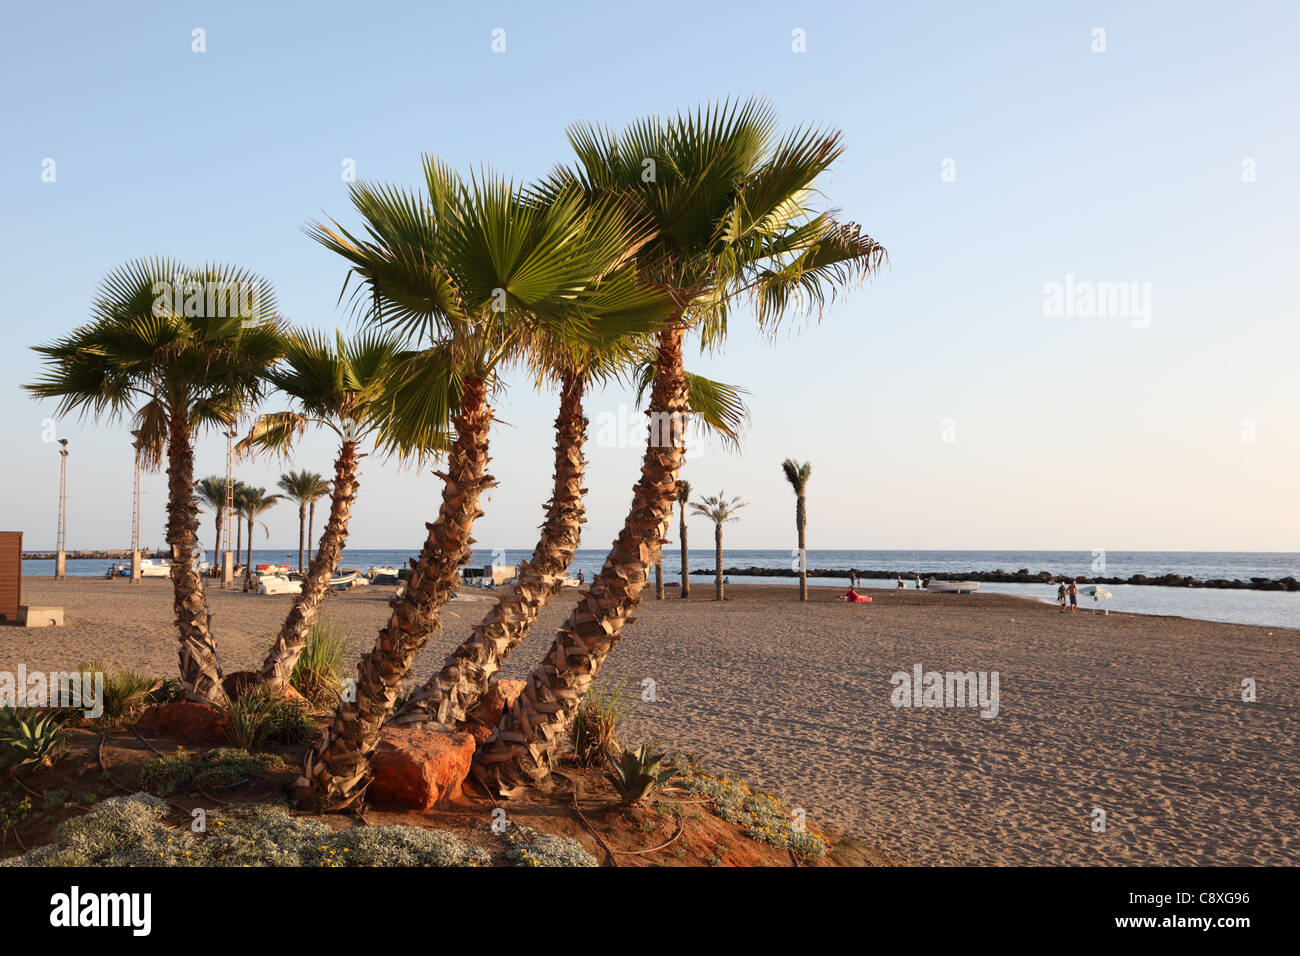 Palm trees on the beach in Almeria, Spain Stock Photo